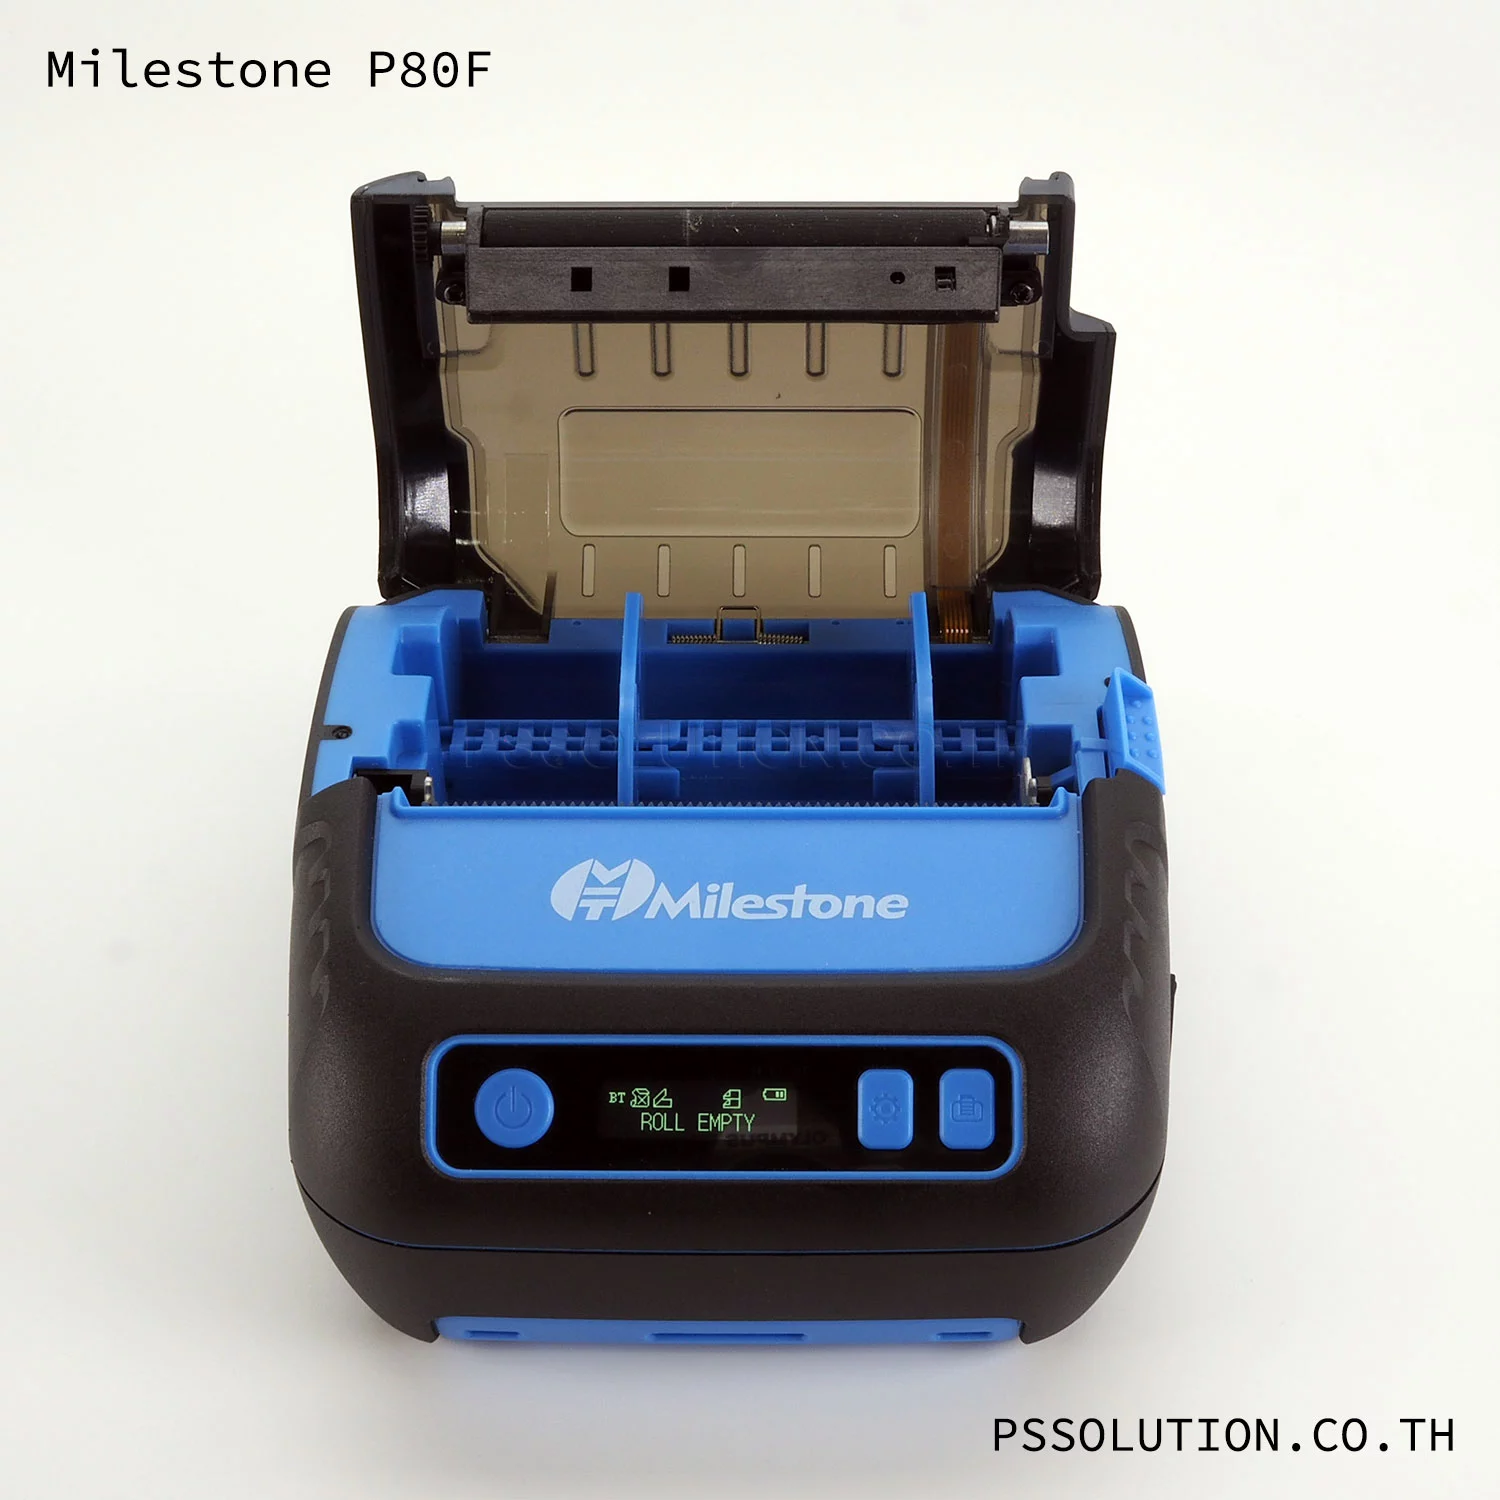 Milestone P80F เครื่องปริ้นใบเสร็จพกพา เครื่องพิมพ์สติกเกอร์พกพา BLUETOOTH พิมพ์จากมือถือ Mobile Printer 80mm-5